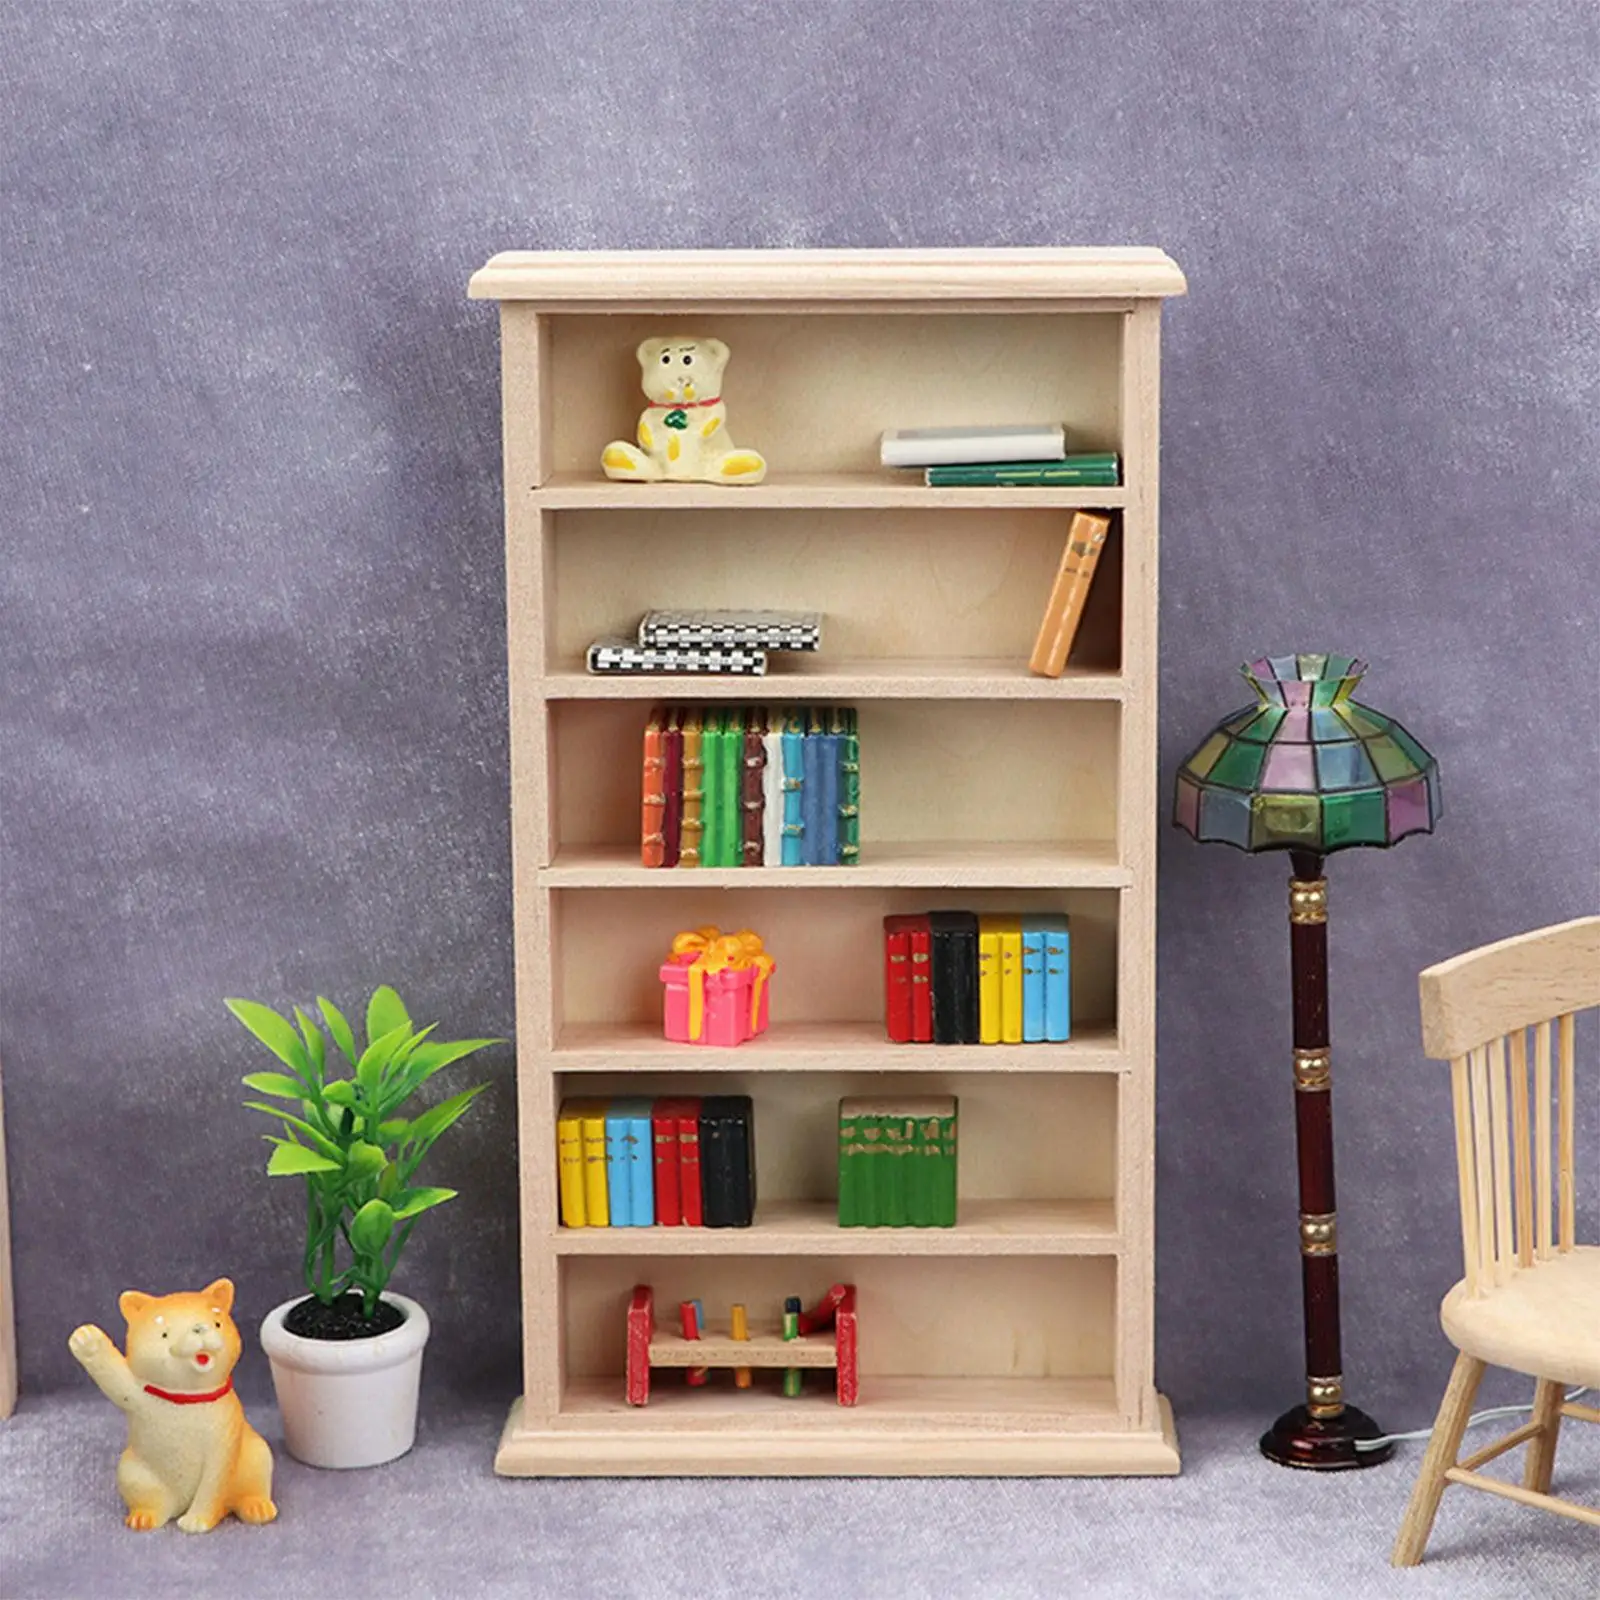 1/12 Dollhouse Miniature Bookcase Dollhouse Miniature Furniture for Kids 3+